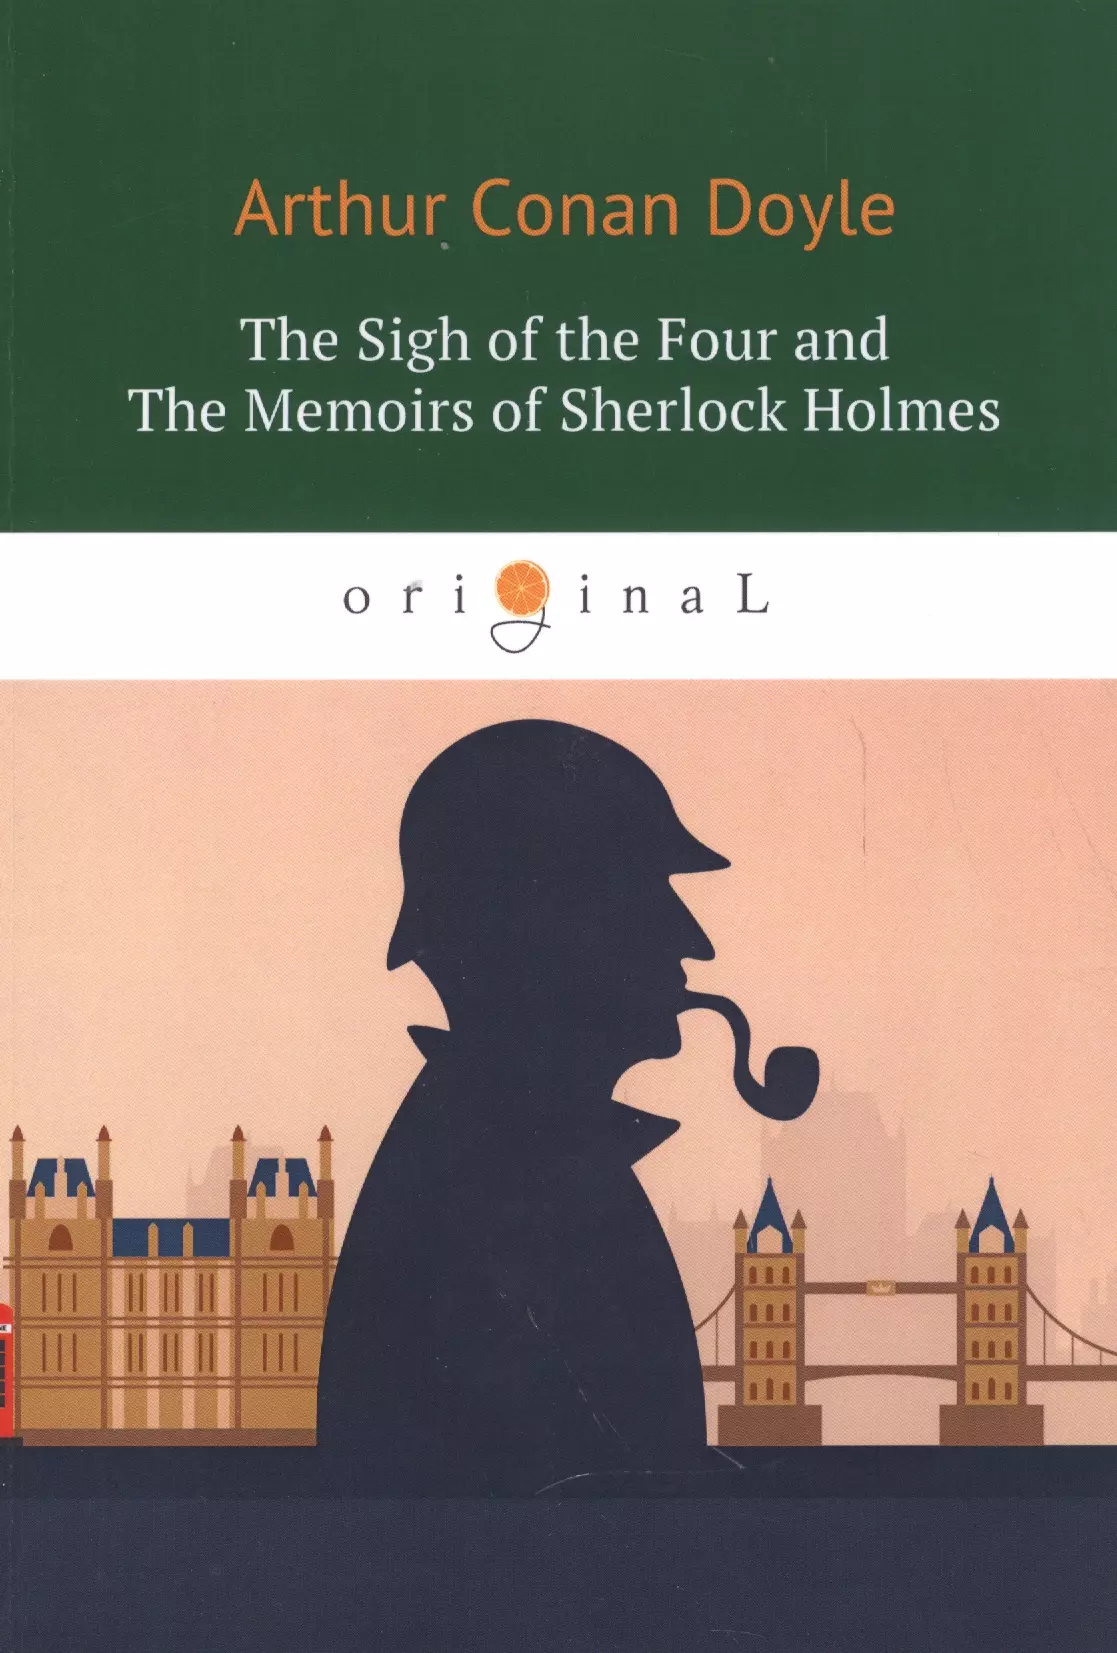 Дойл Артур Конан The Sigh of the Four and The Memoirs of Sherlock Holmes = Знак Четырех и Воспоминания Шерлока Холмса doyle a sherlock holmes the complete stories